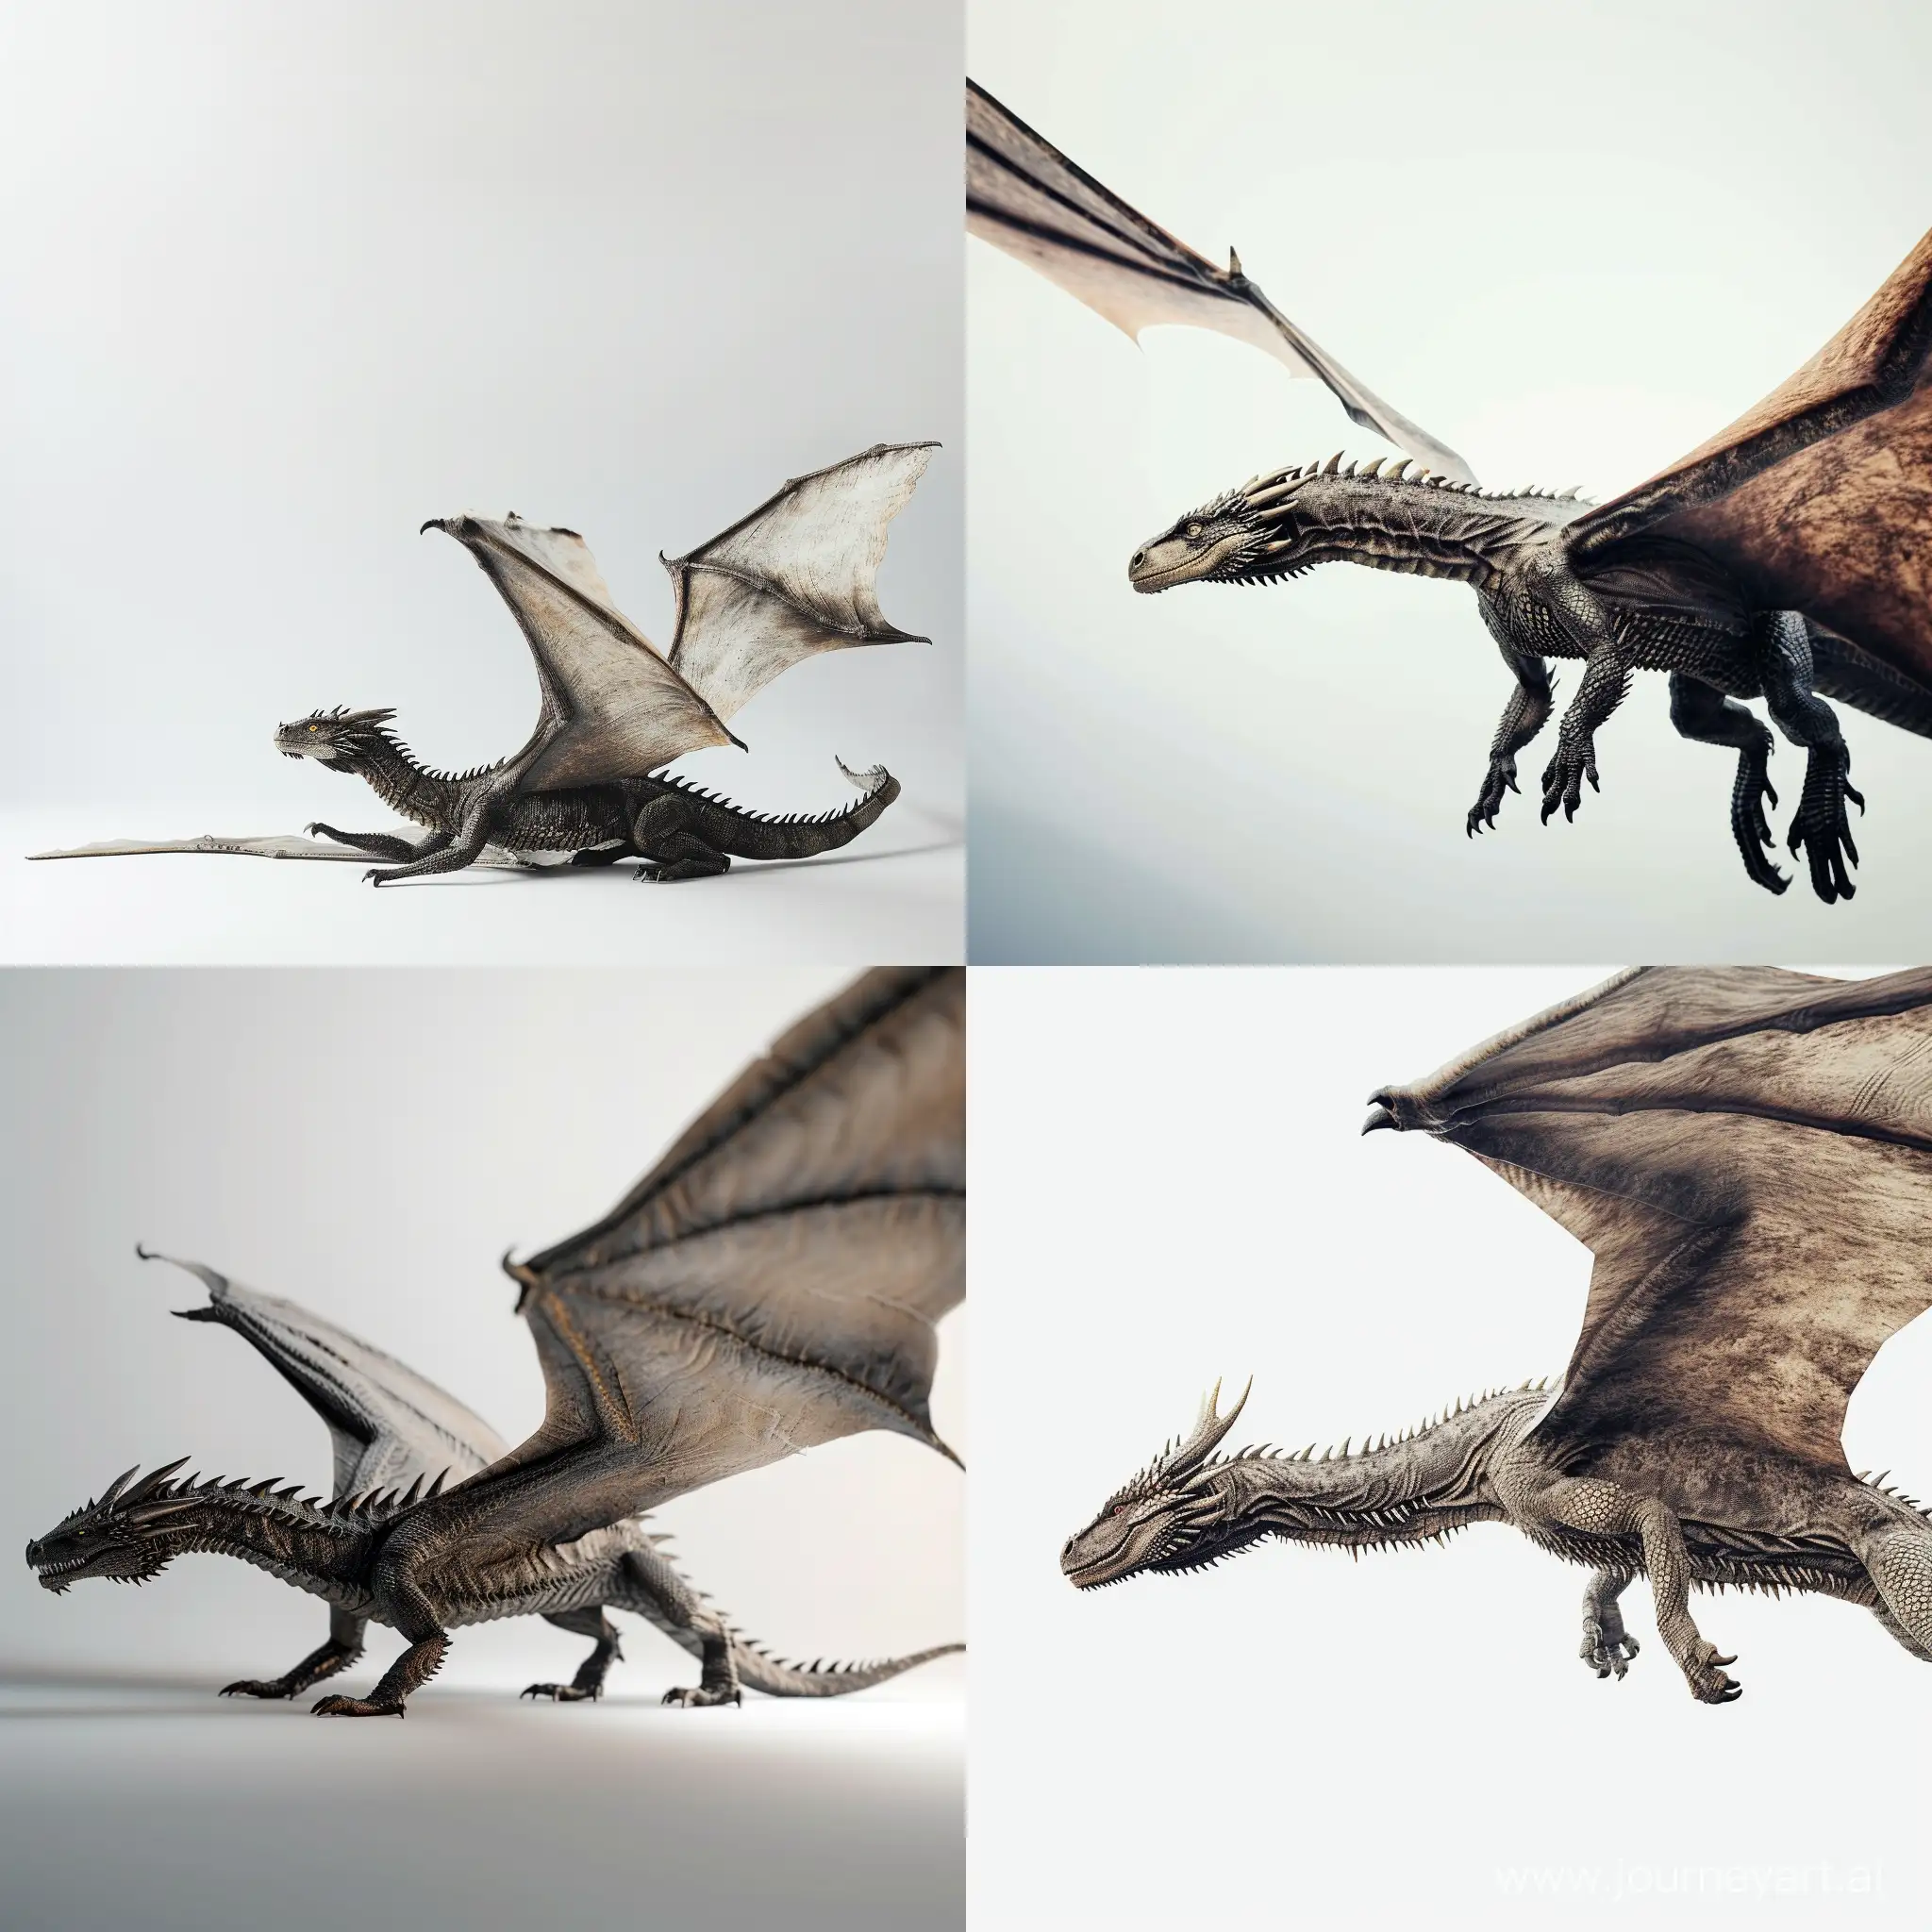 Grim-Dark-Side-View-of-Flying-Dragon-on-White-Background